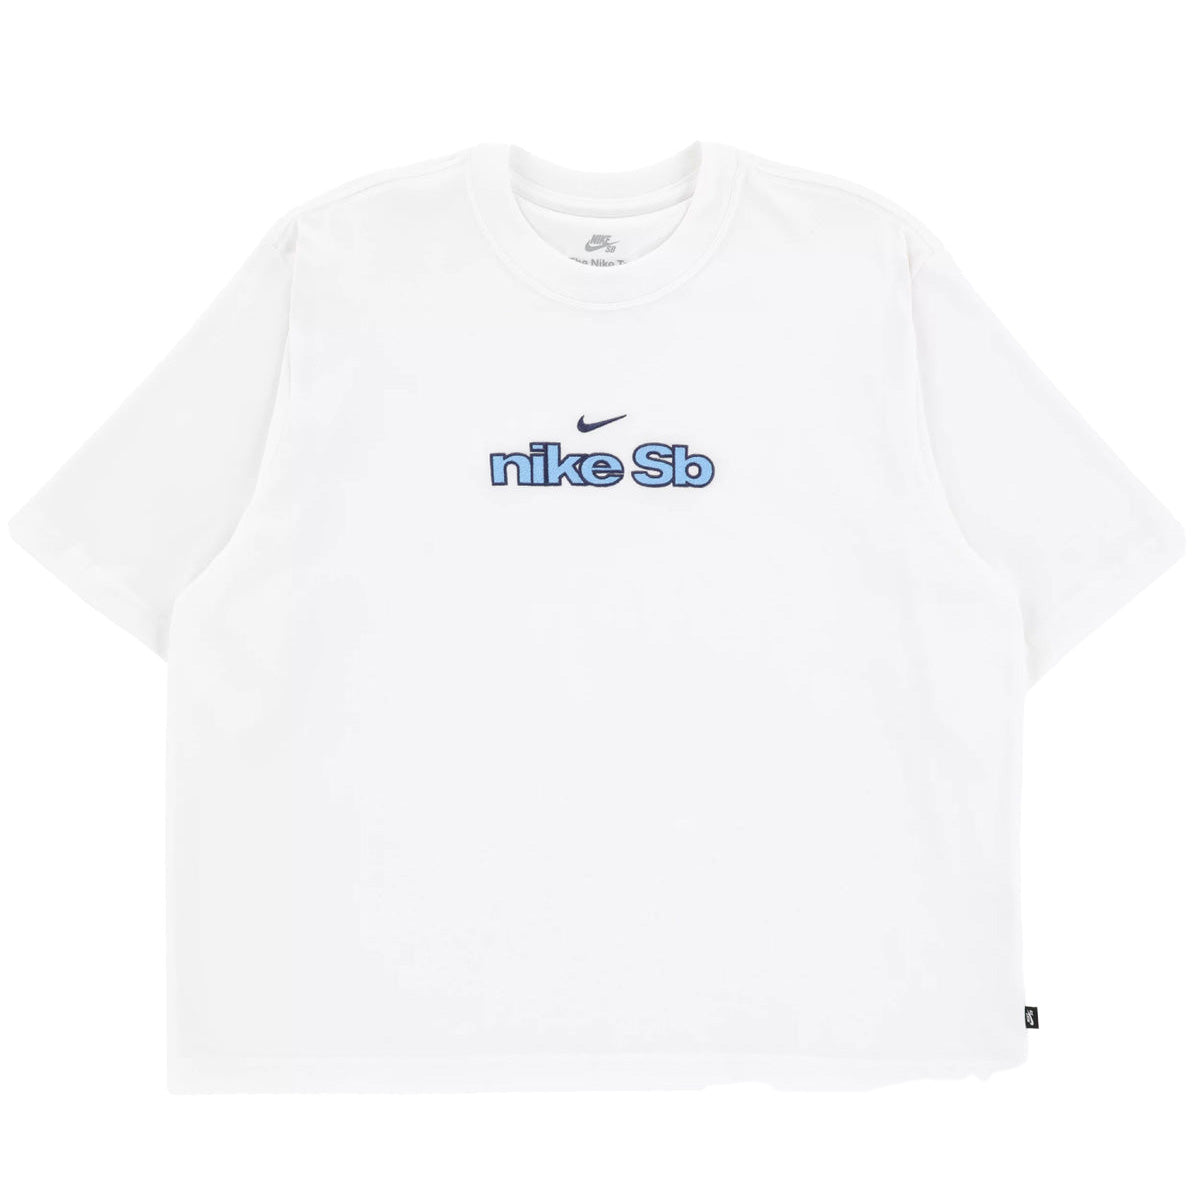 Nike SB Women's Embroidered Skate T-Shirt White